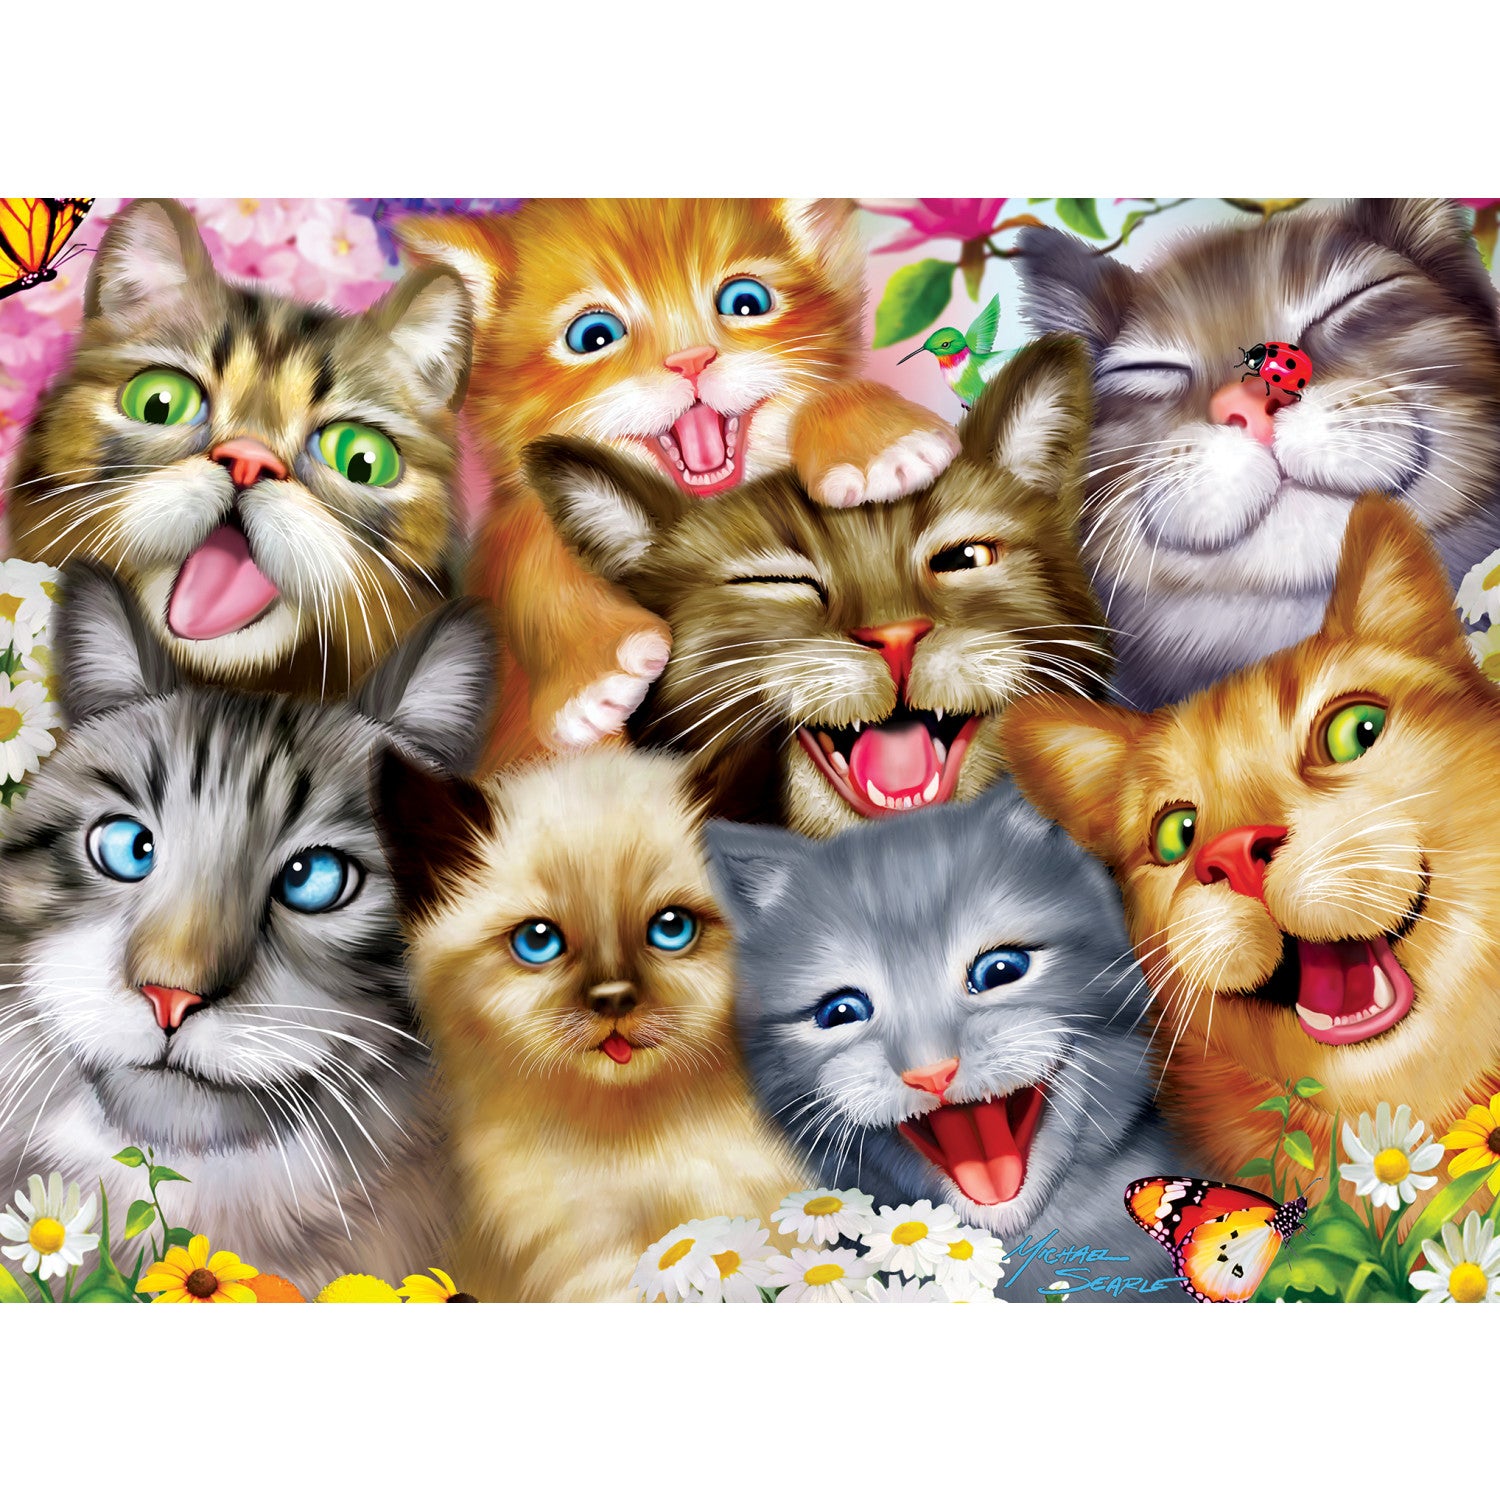 Selfies - Pretty Kitties 200 Piece Puzzle